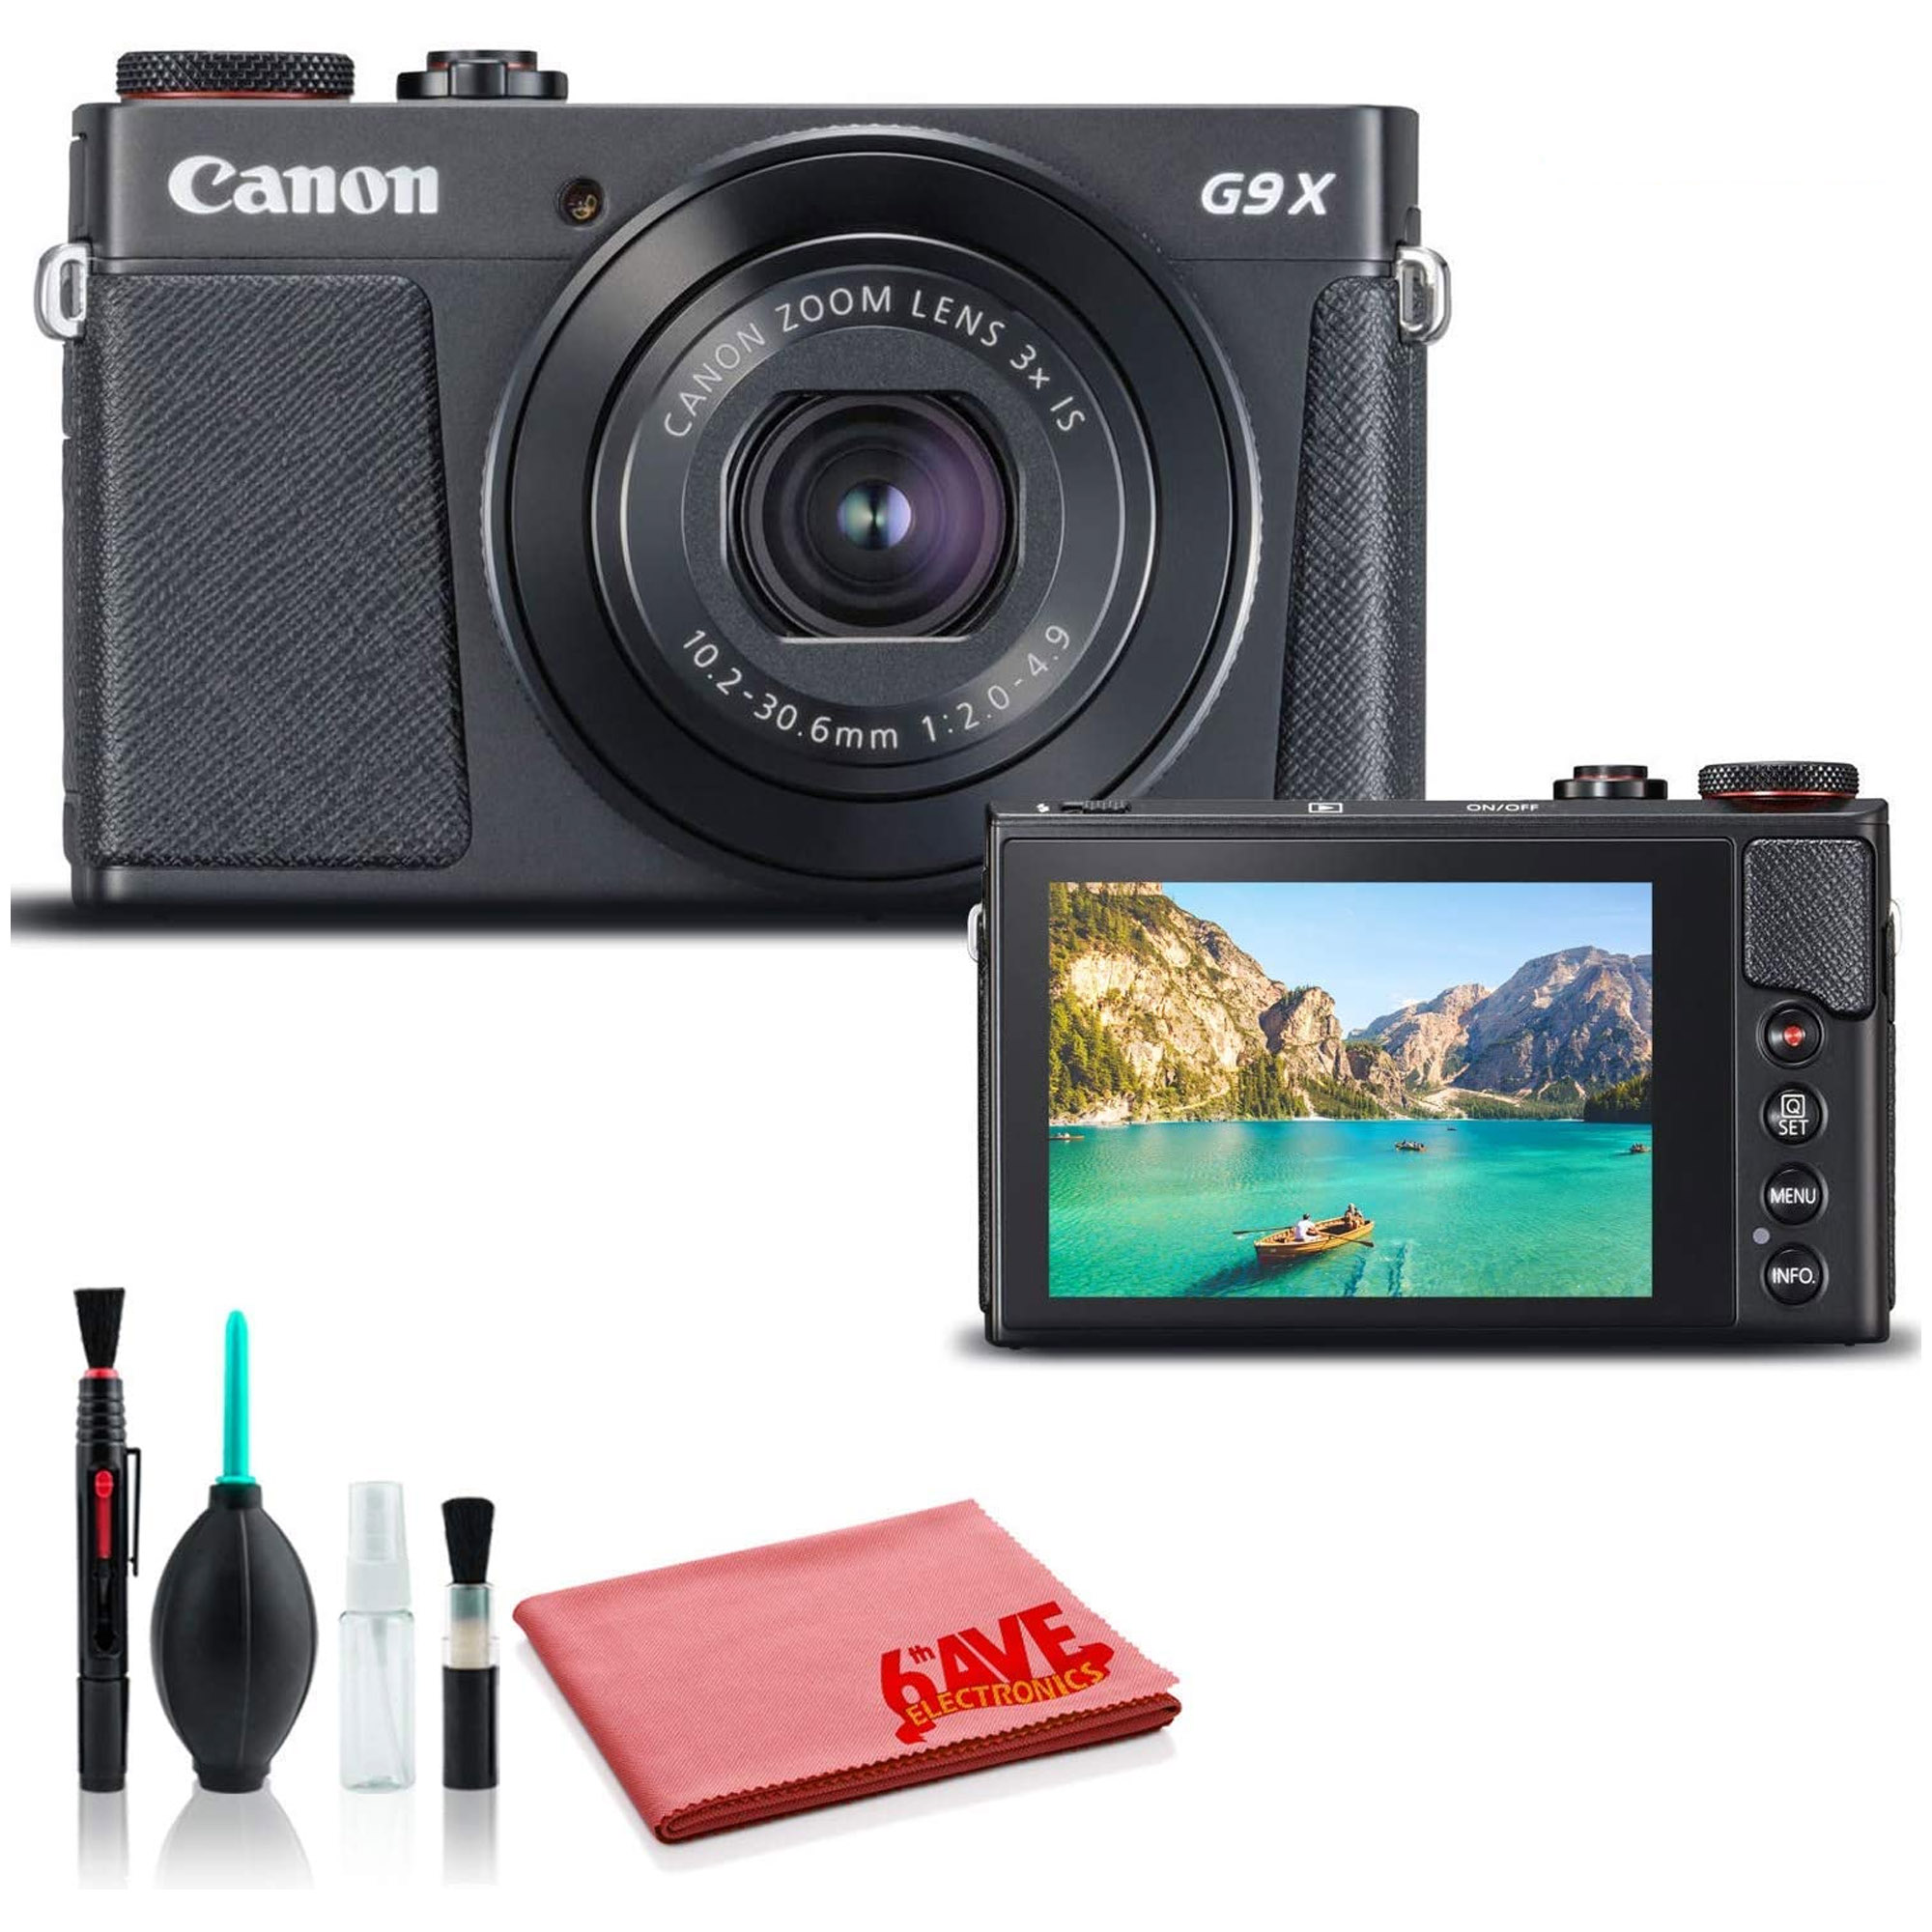 Canon PowerShot G9 X Mark II Digital Camera (Black) (International Model) - Standard Kit - image 1 of 4